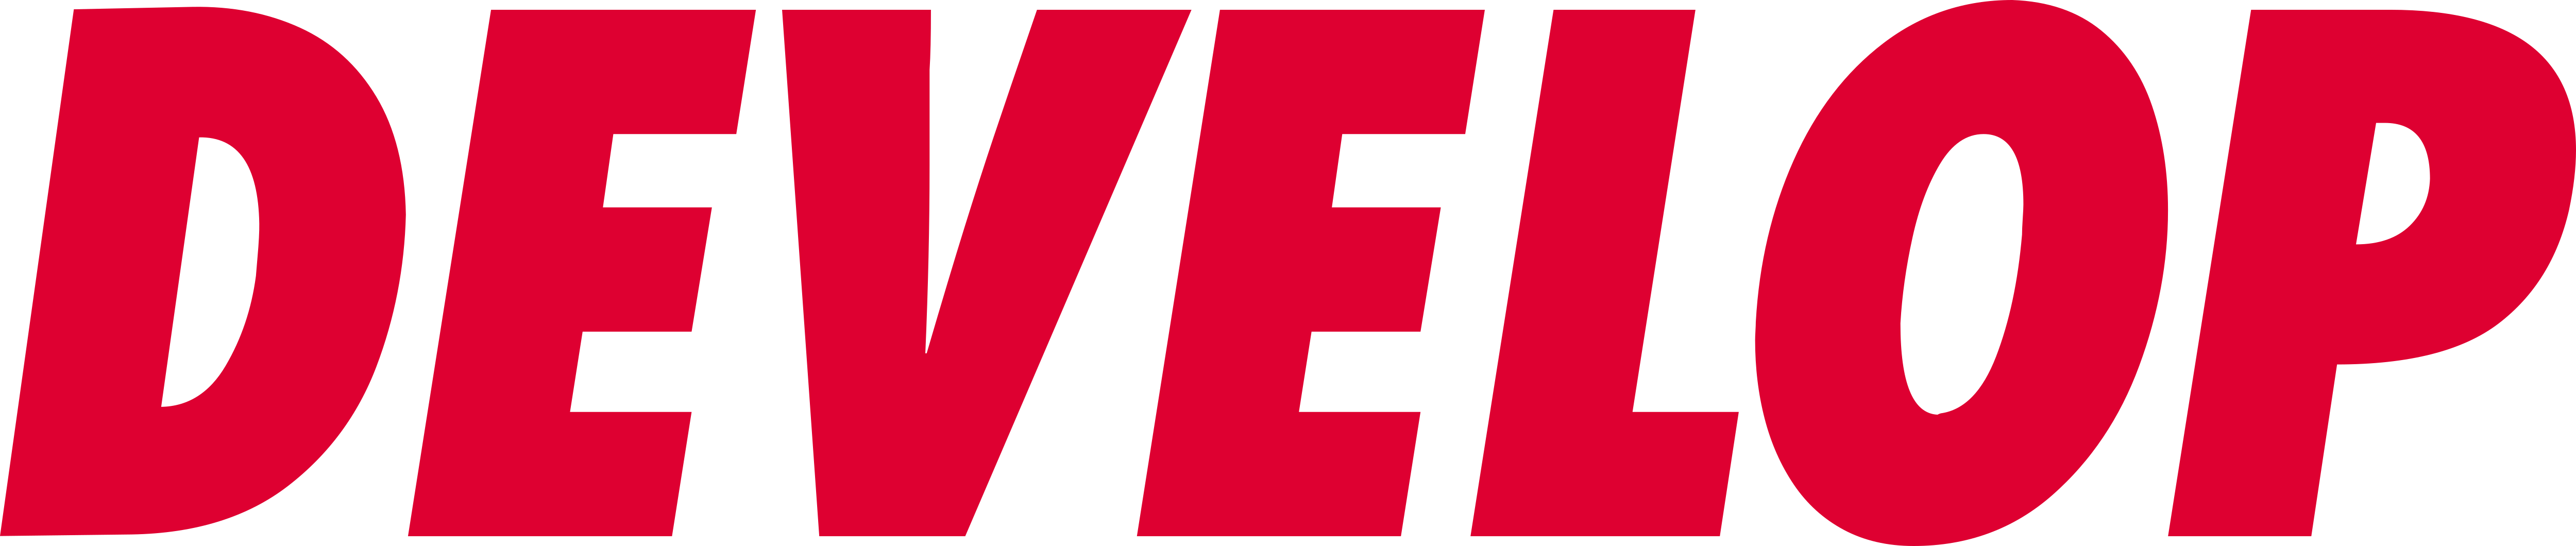 Gediz elektrik png logo